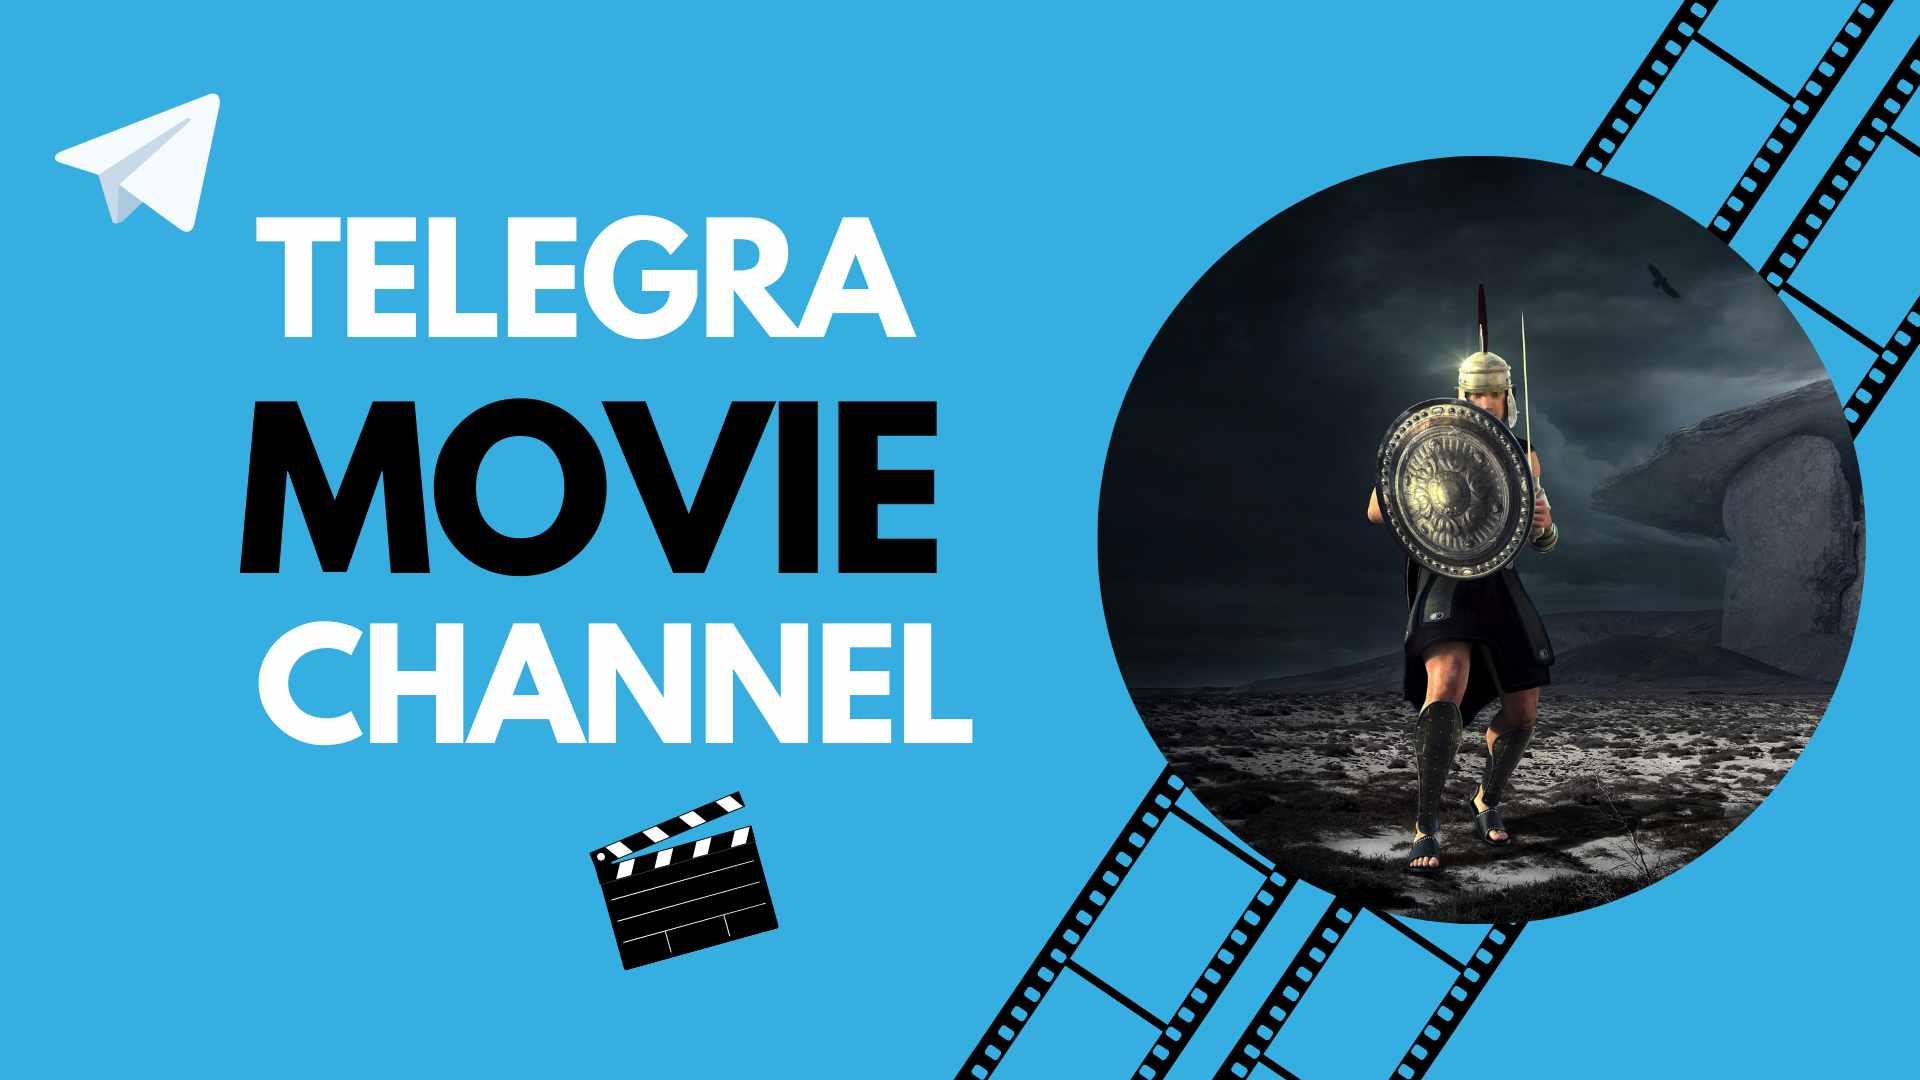 List of Telegram movie channel: Check and Enjoy